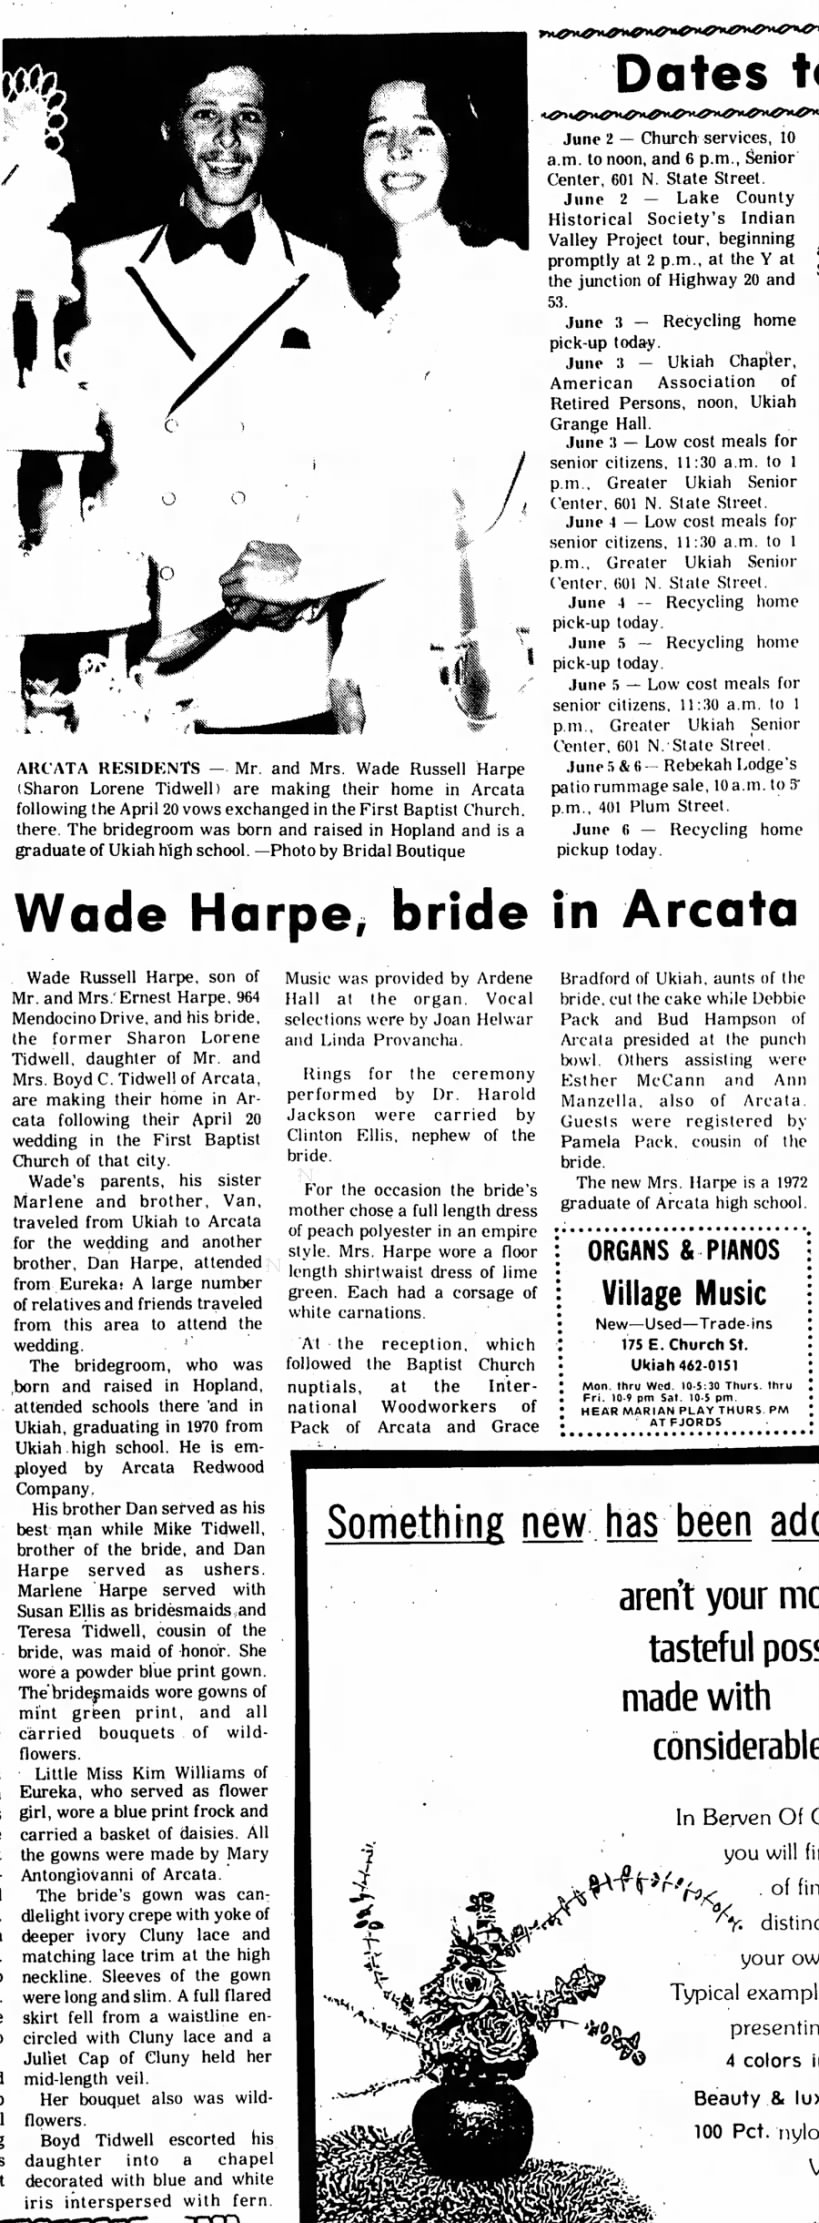 Wade & Sharon Harpe's Wedding